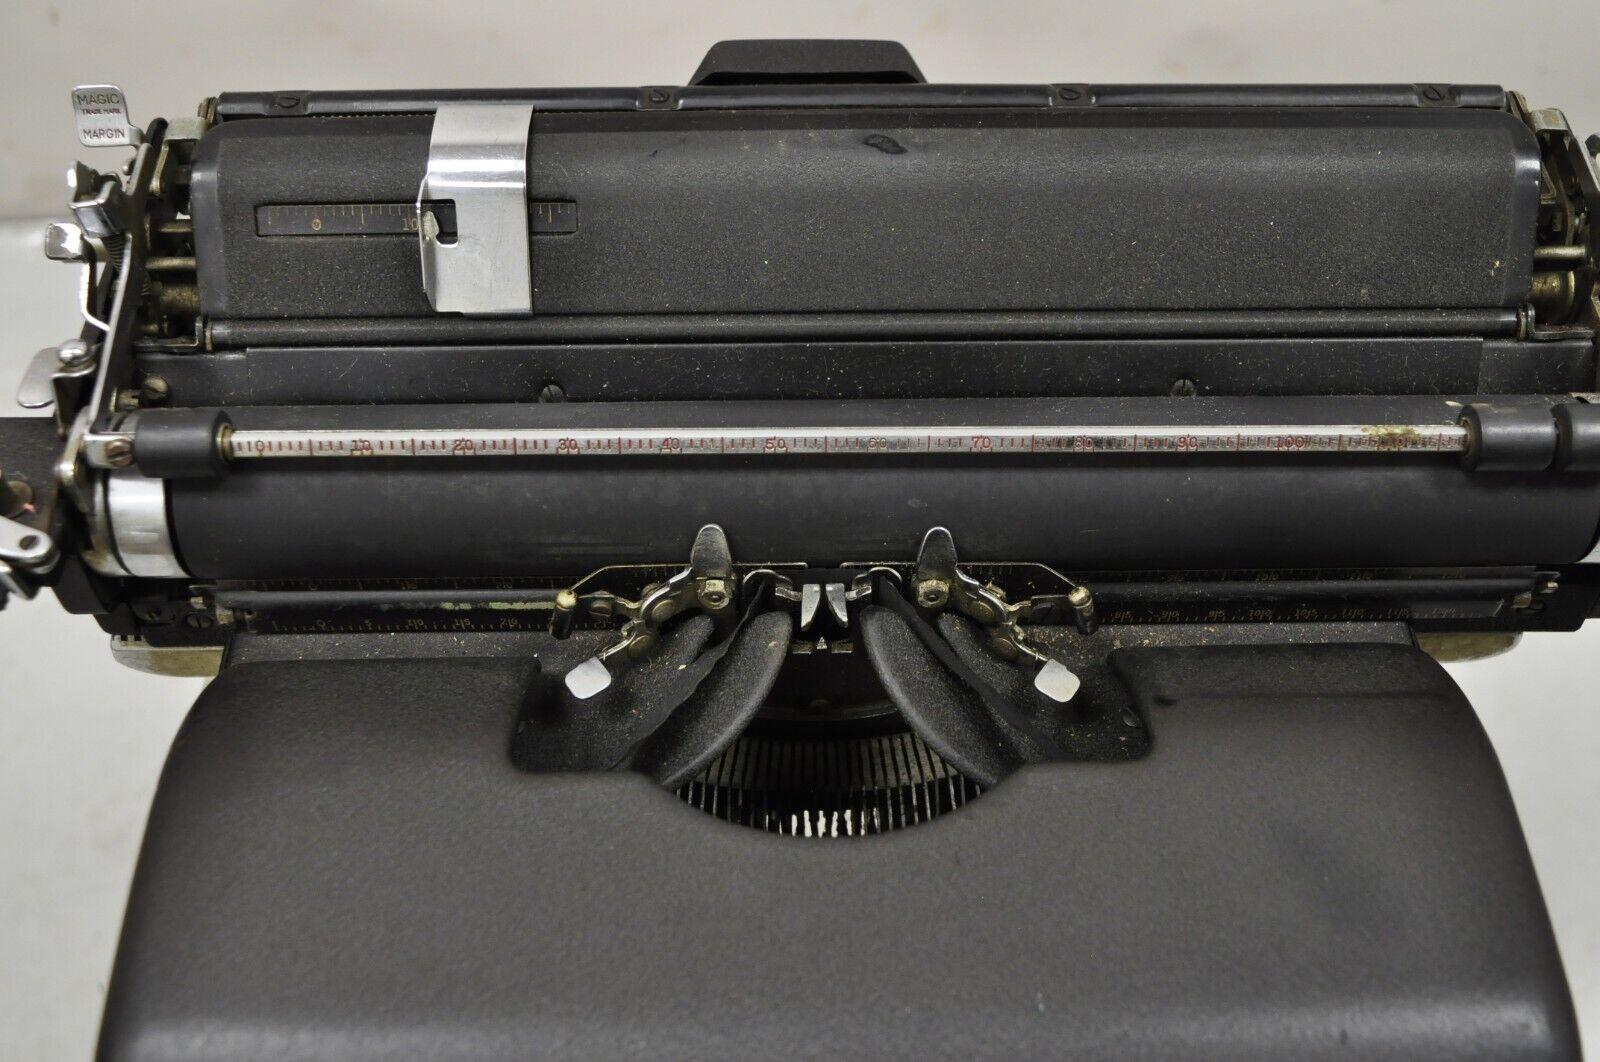 Mid-Century Modern Vintage 1940s Royal KMM Model 2178000 Magic Margin Touch Control Typewriter For Sale